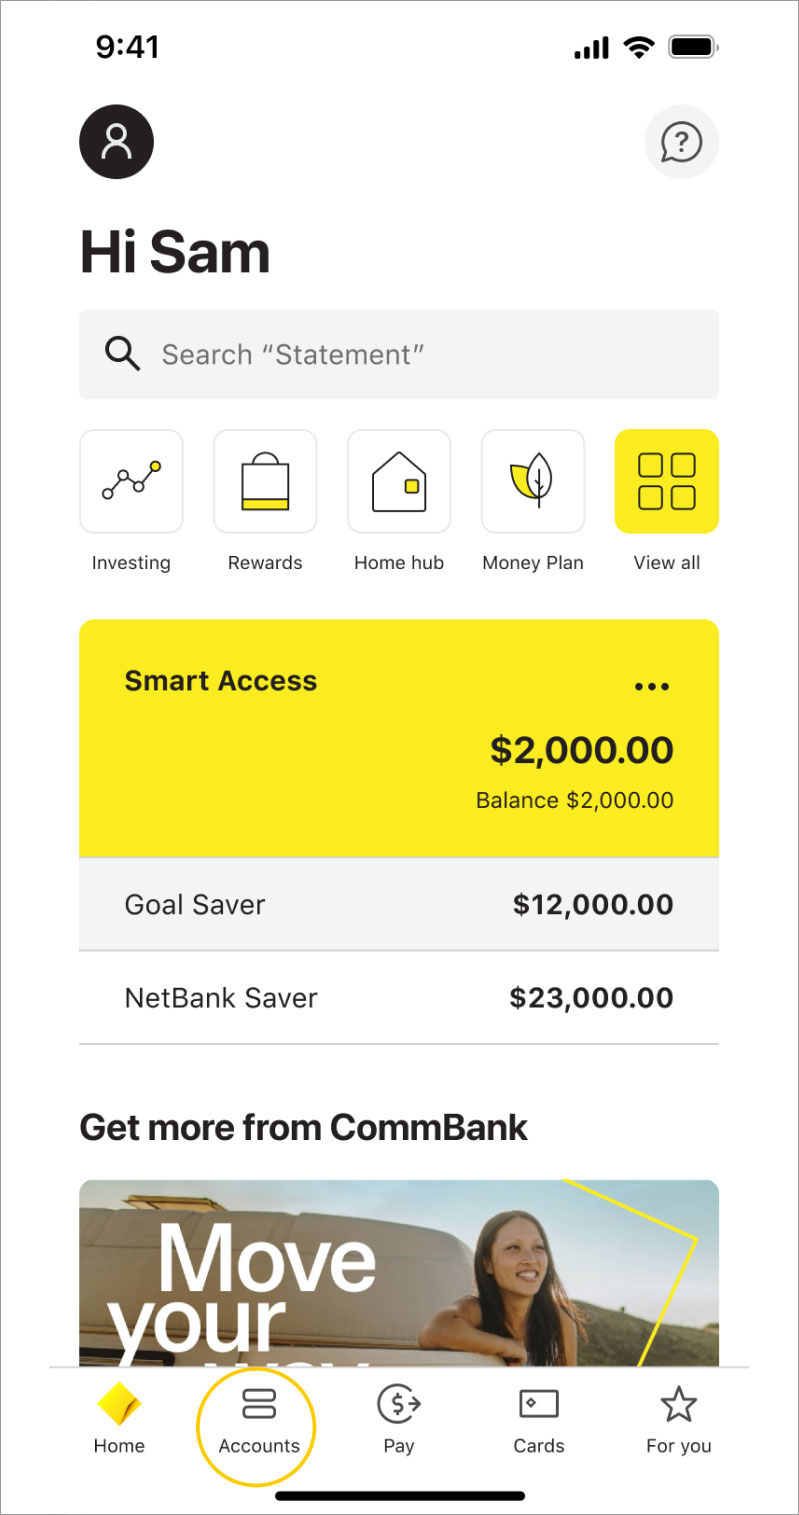 CommBank app home screen showing ‘Accounts’